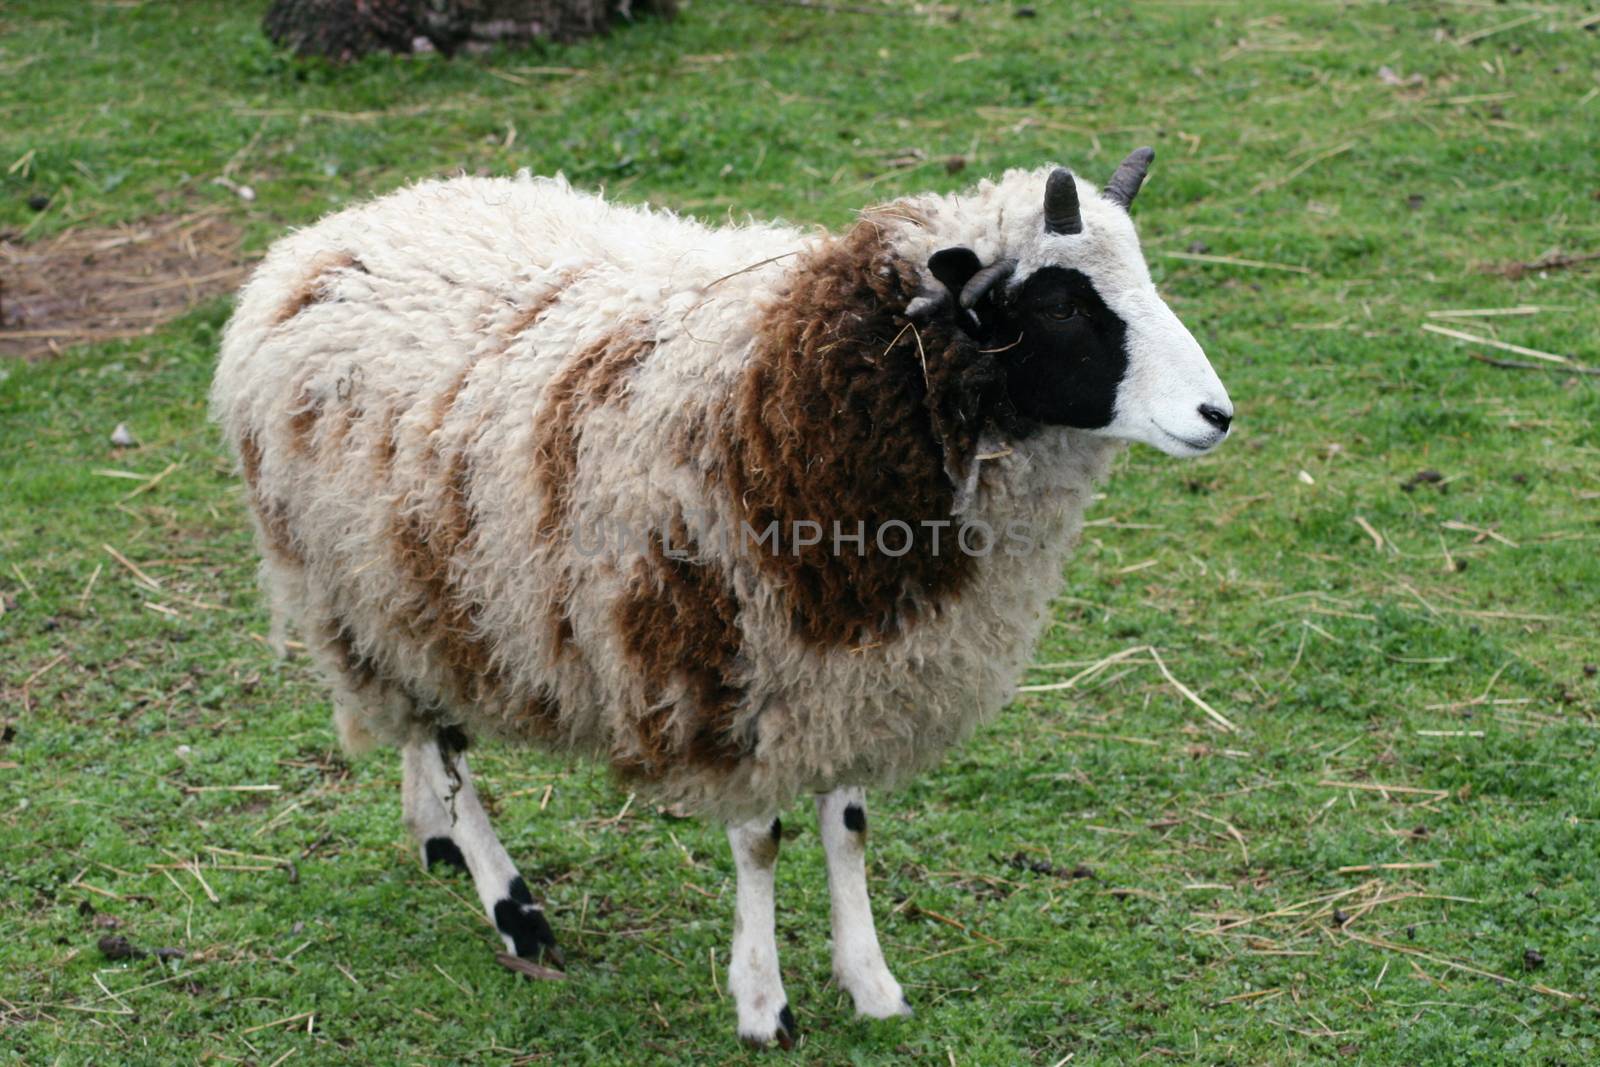 An Adolescent four horn sheep on a green field  Ein Halbw�chsiges Vierhornschaf,auf gr�ner Wiese